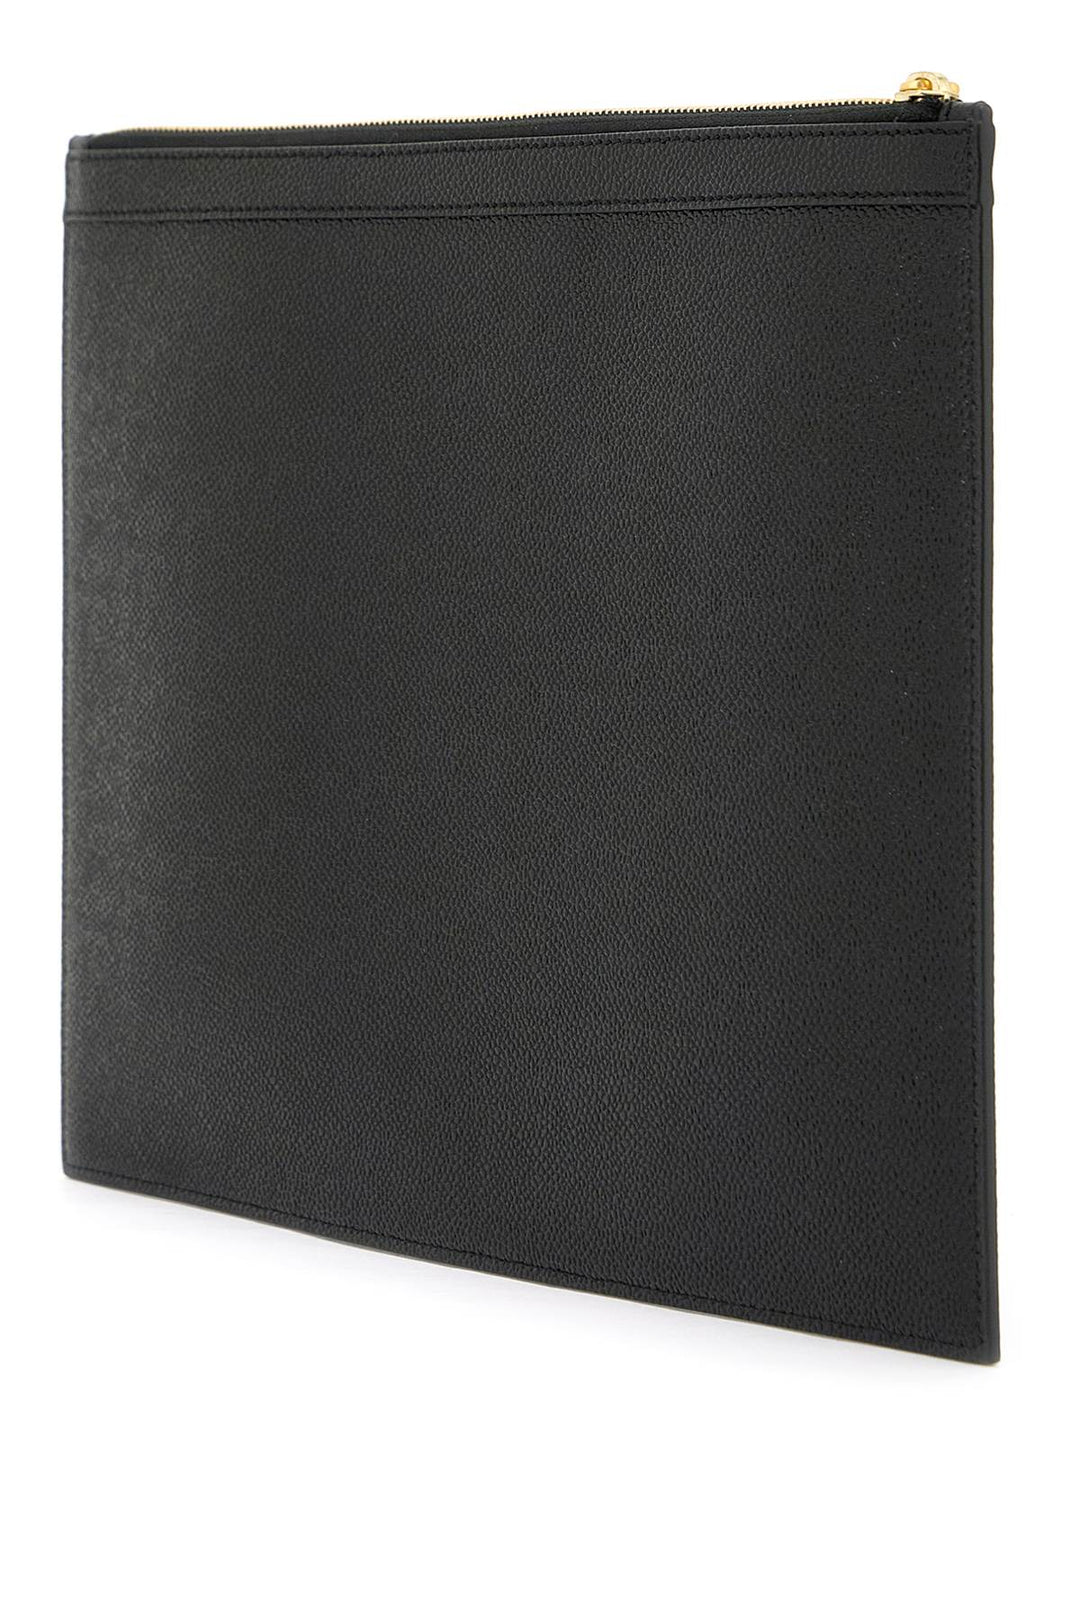 Thom Browne Leather Medium Document Holder   Black